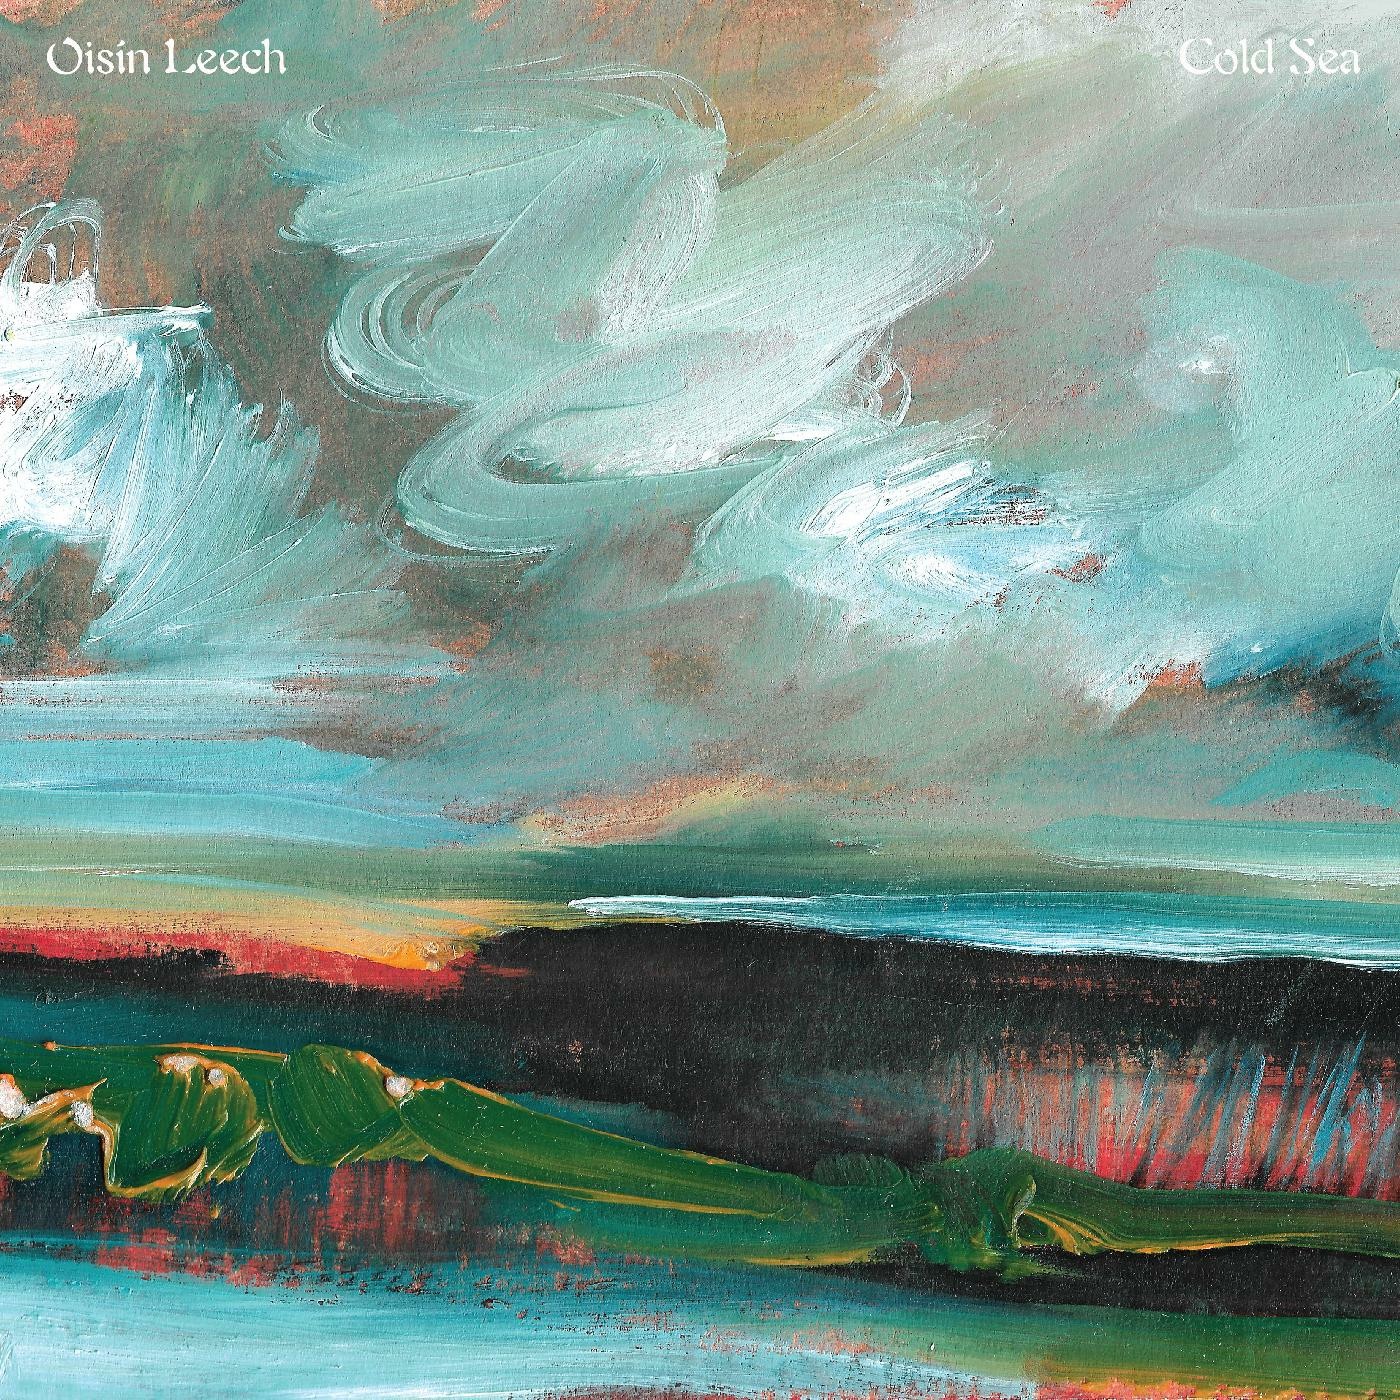 Cold Sea by Oisin Leech